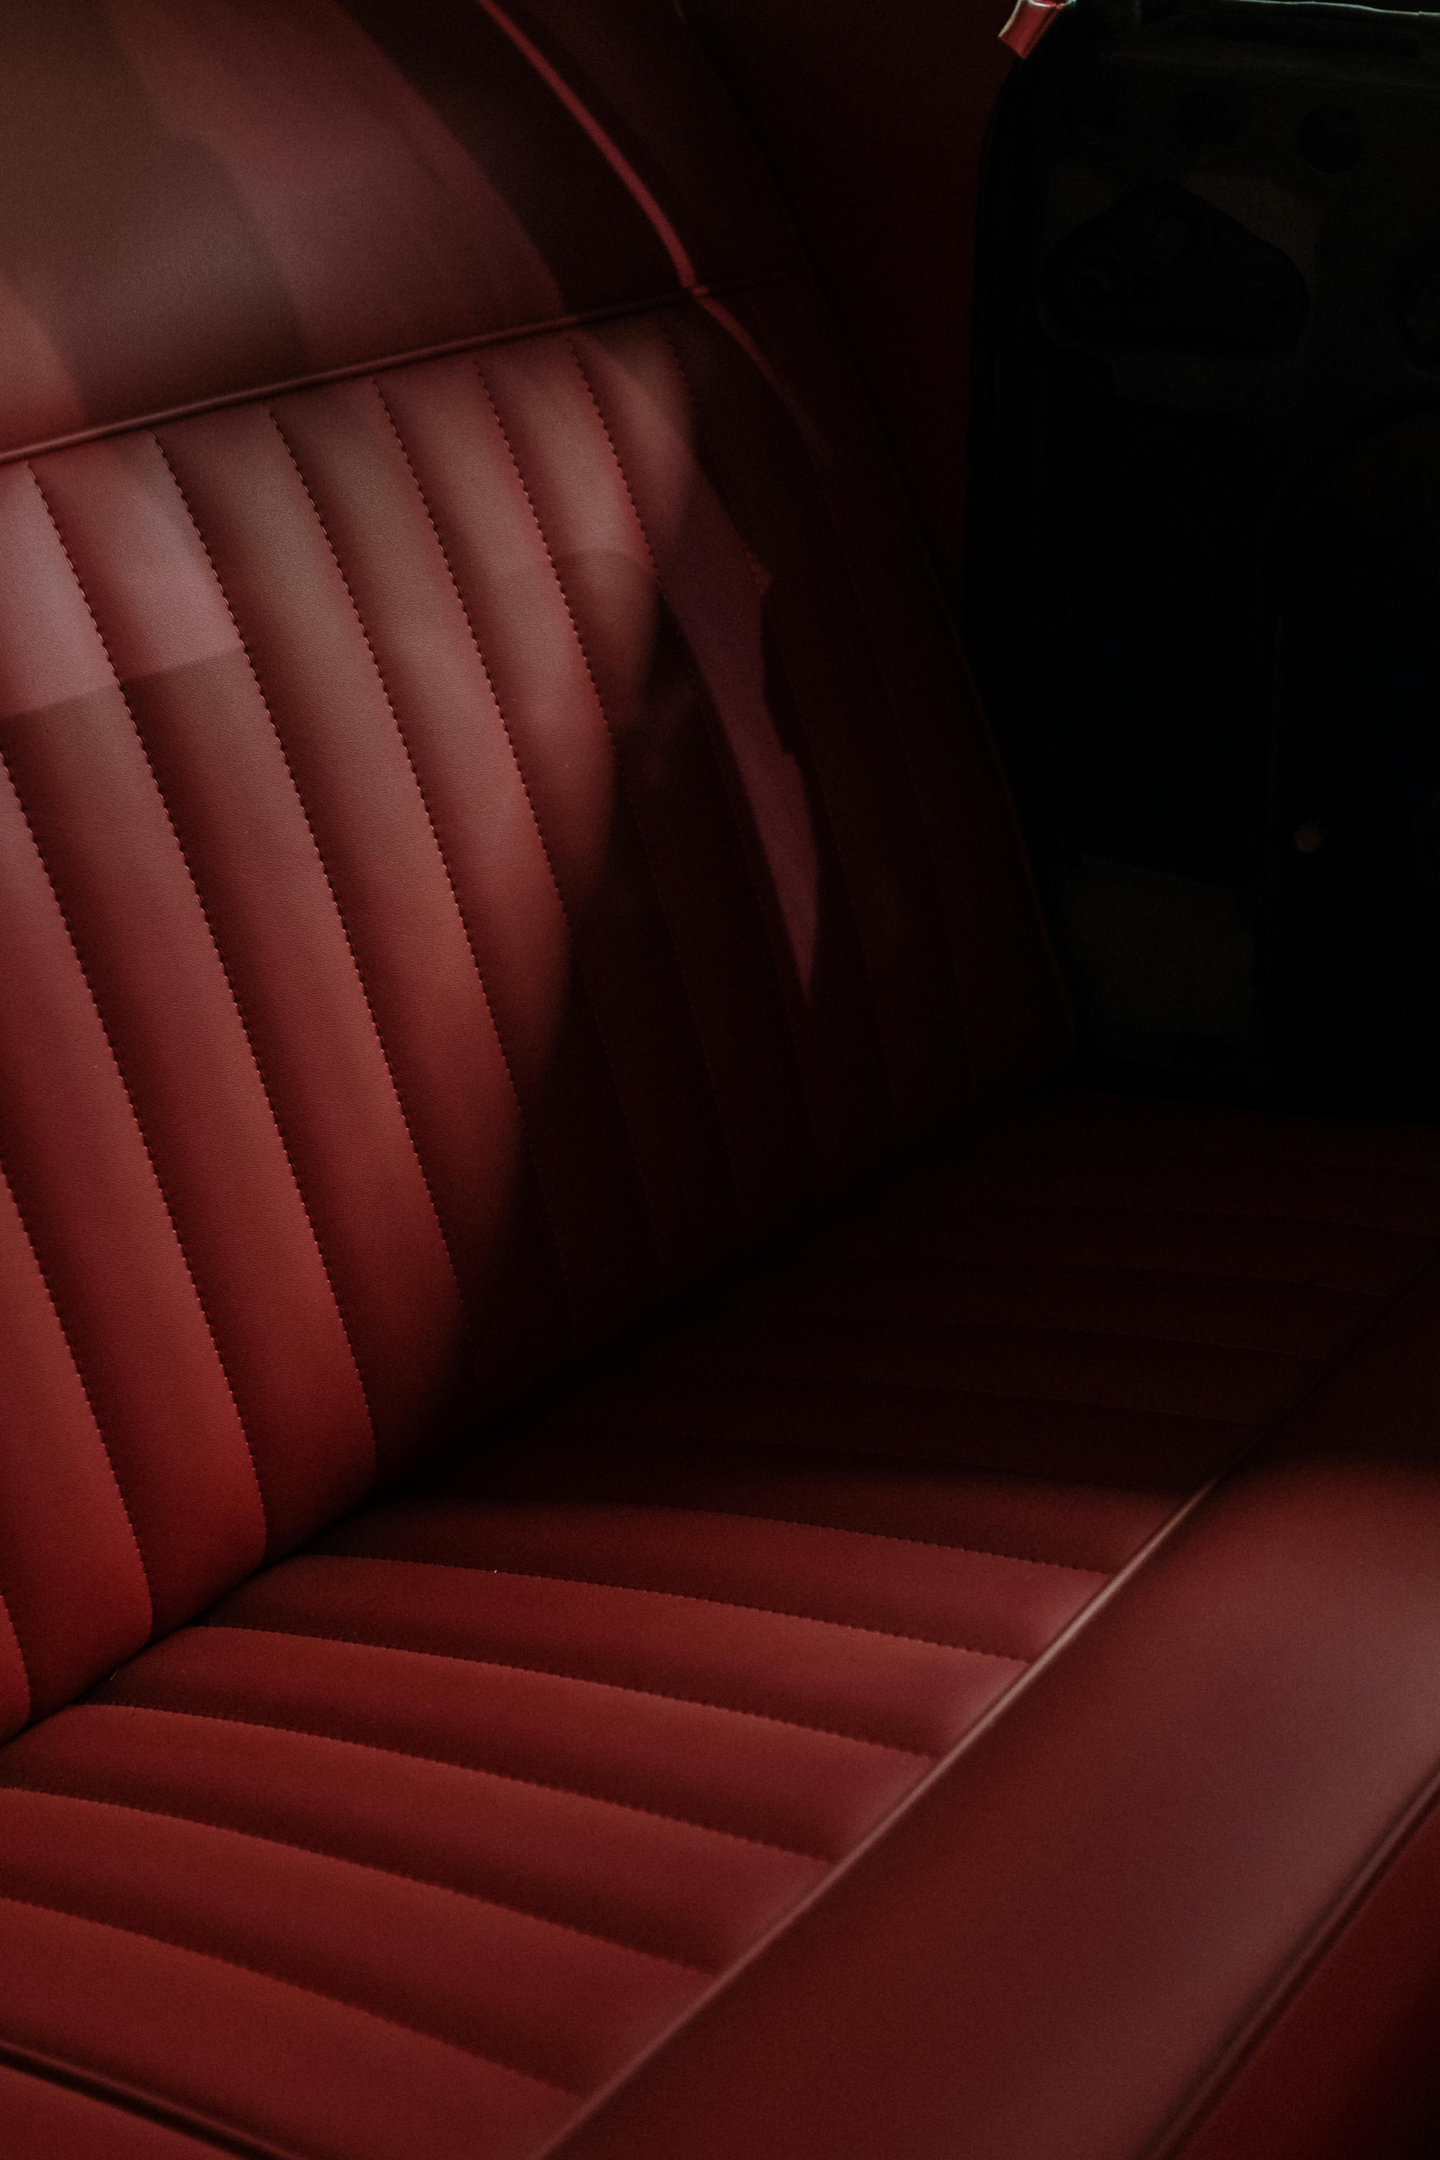 Clean red car backseat